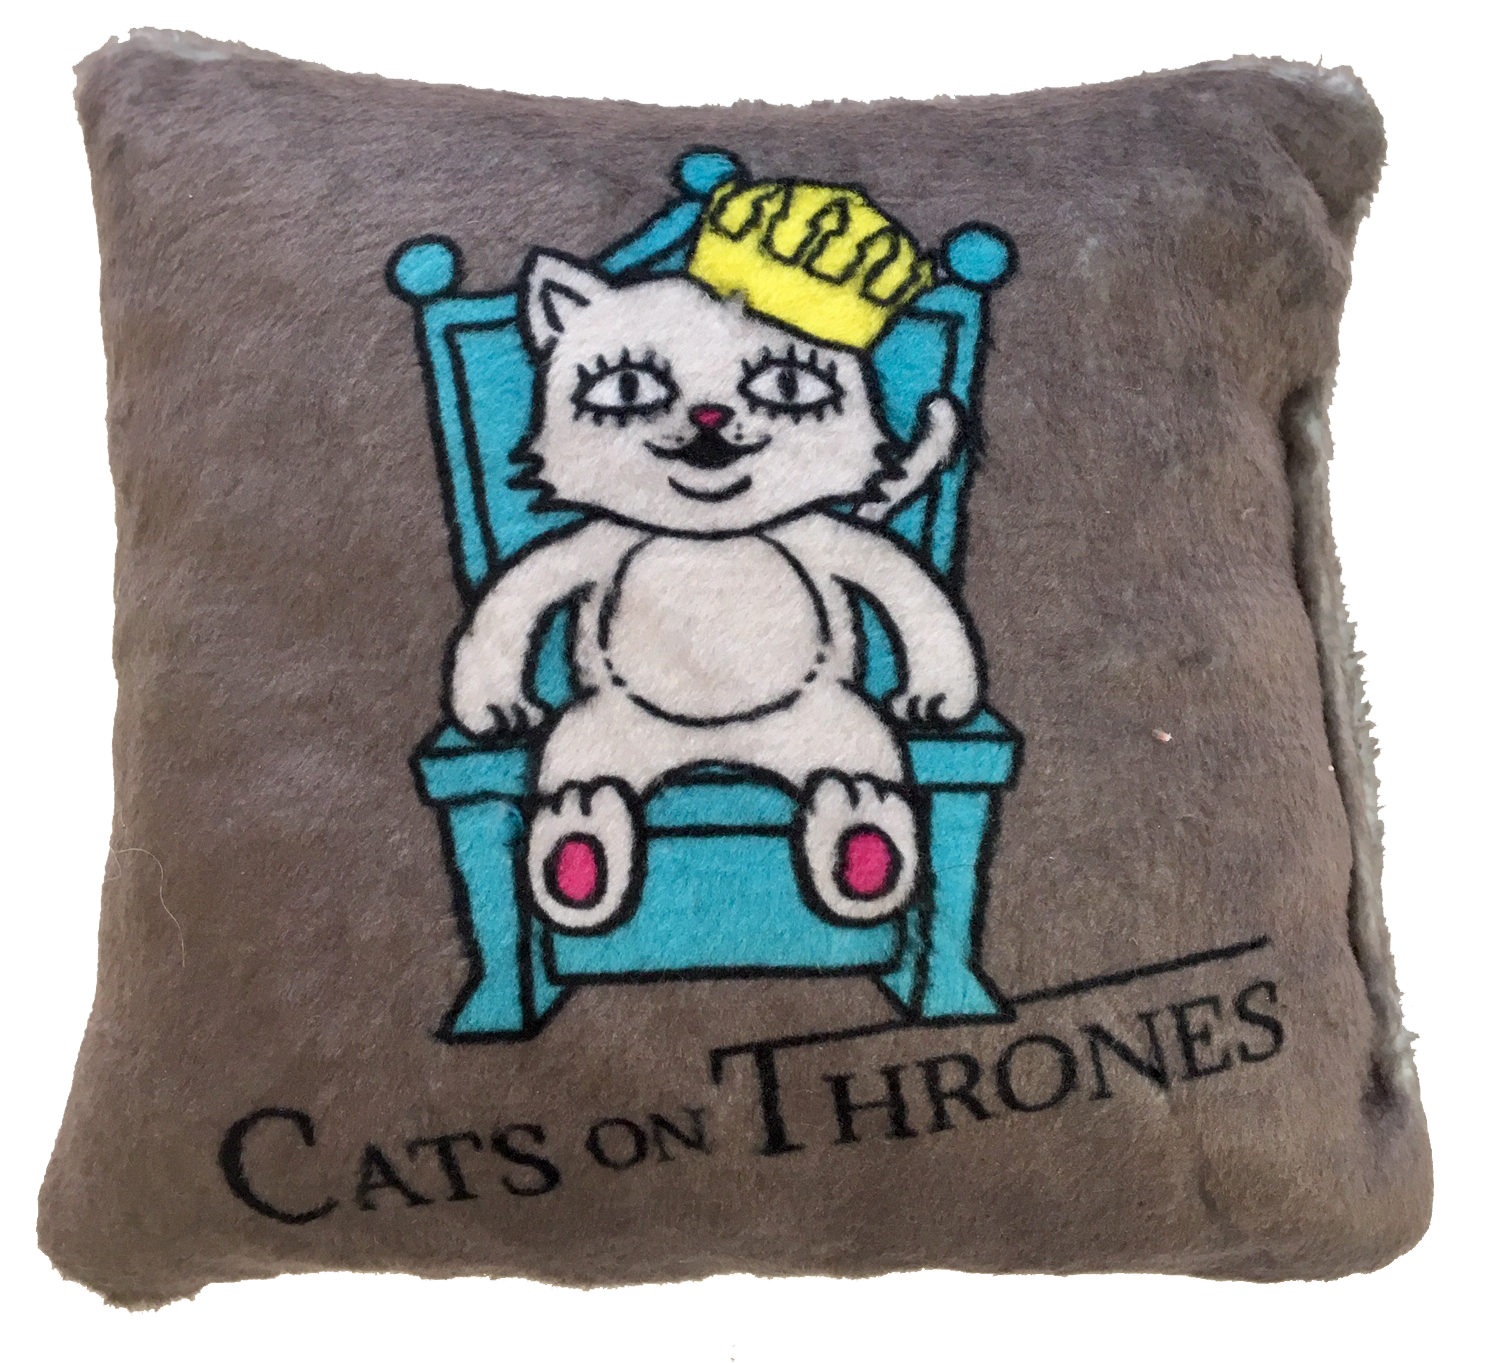 Coussin de jeu “Cats on Thrones”